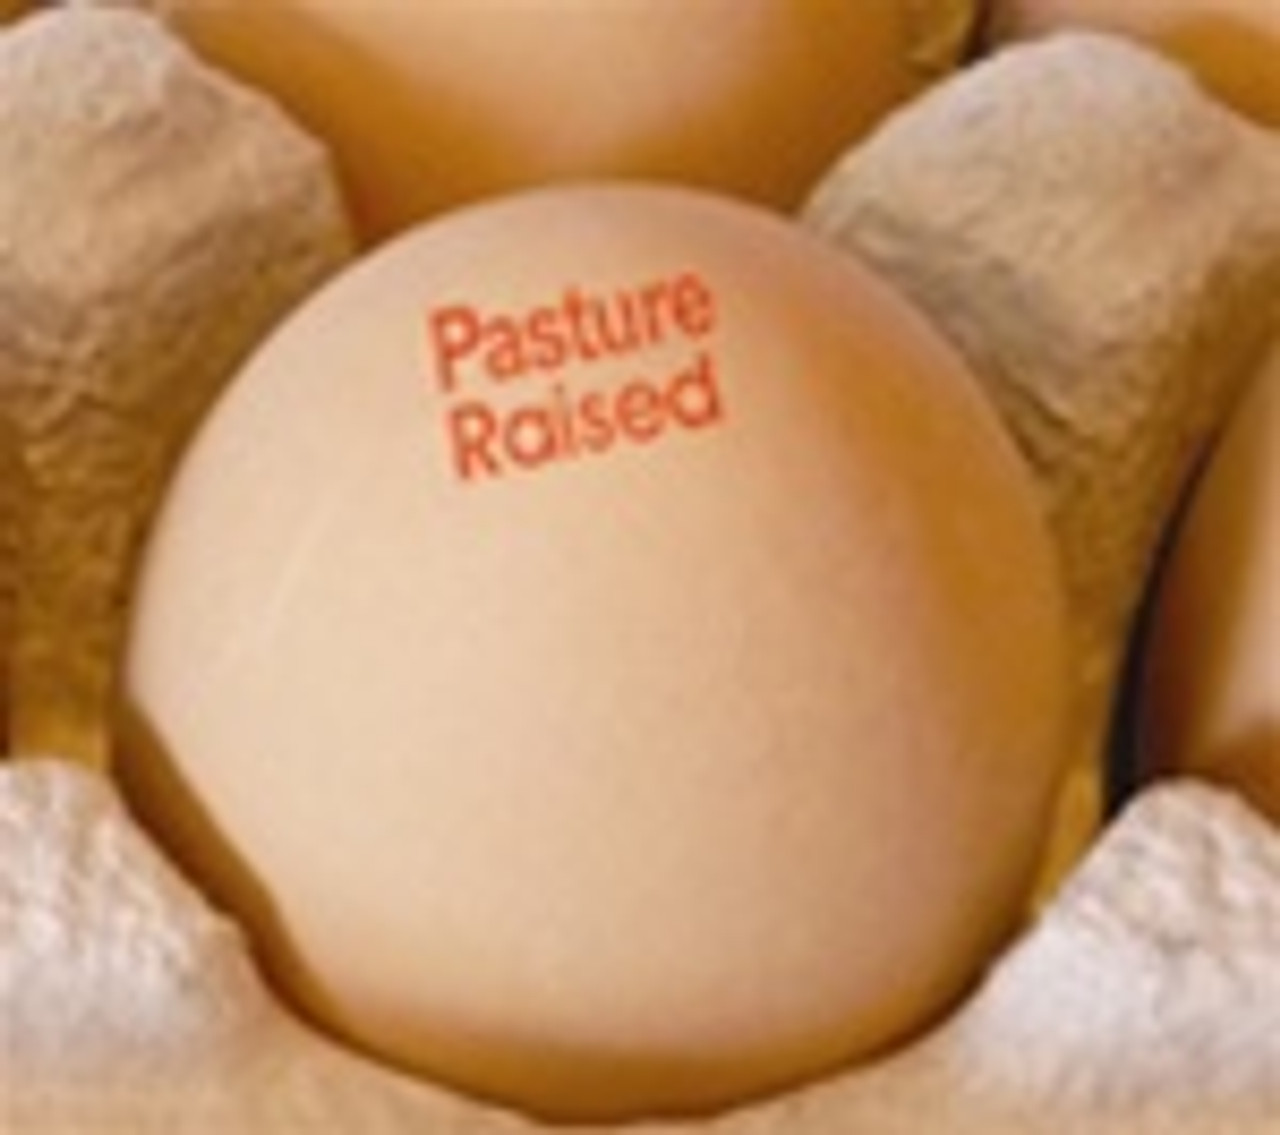 Pasture Raised Egg Stamp